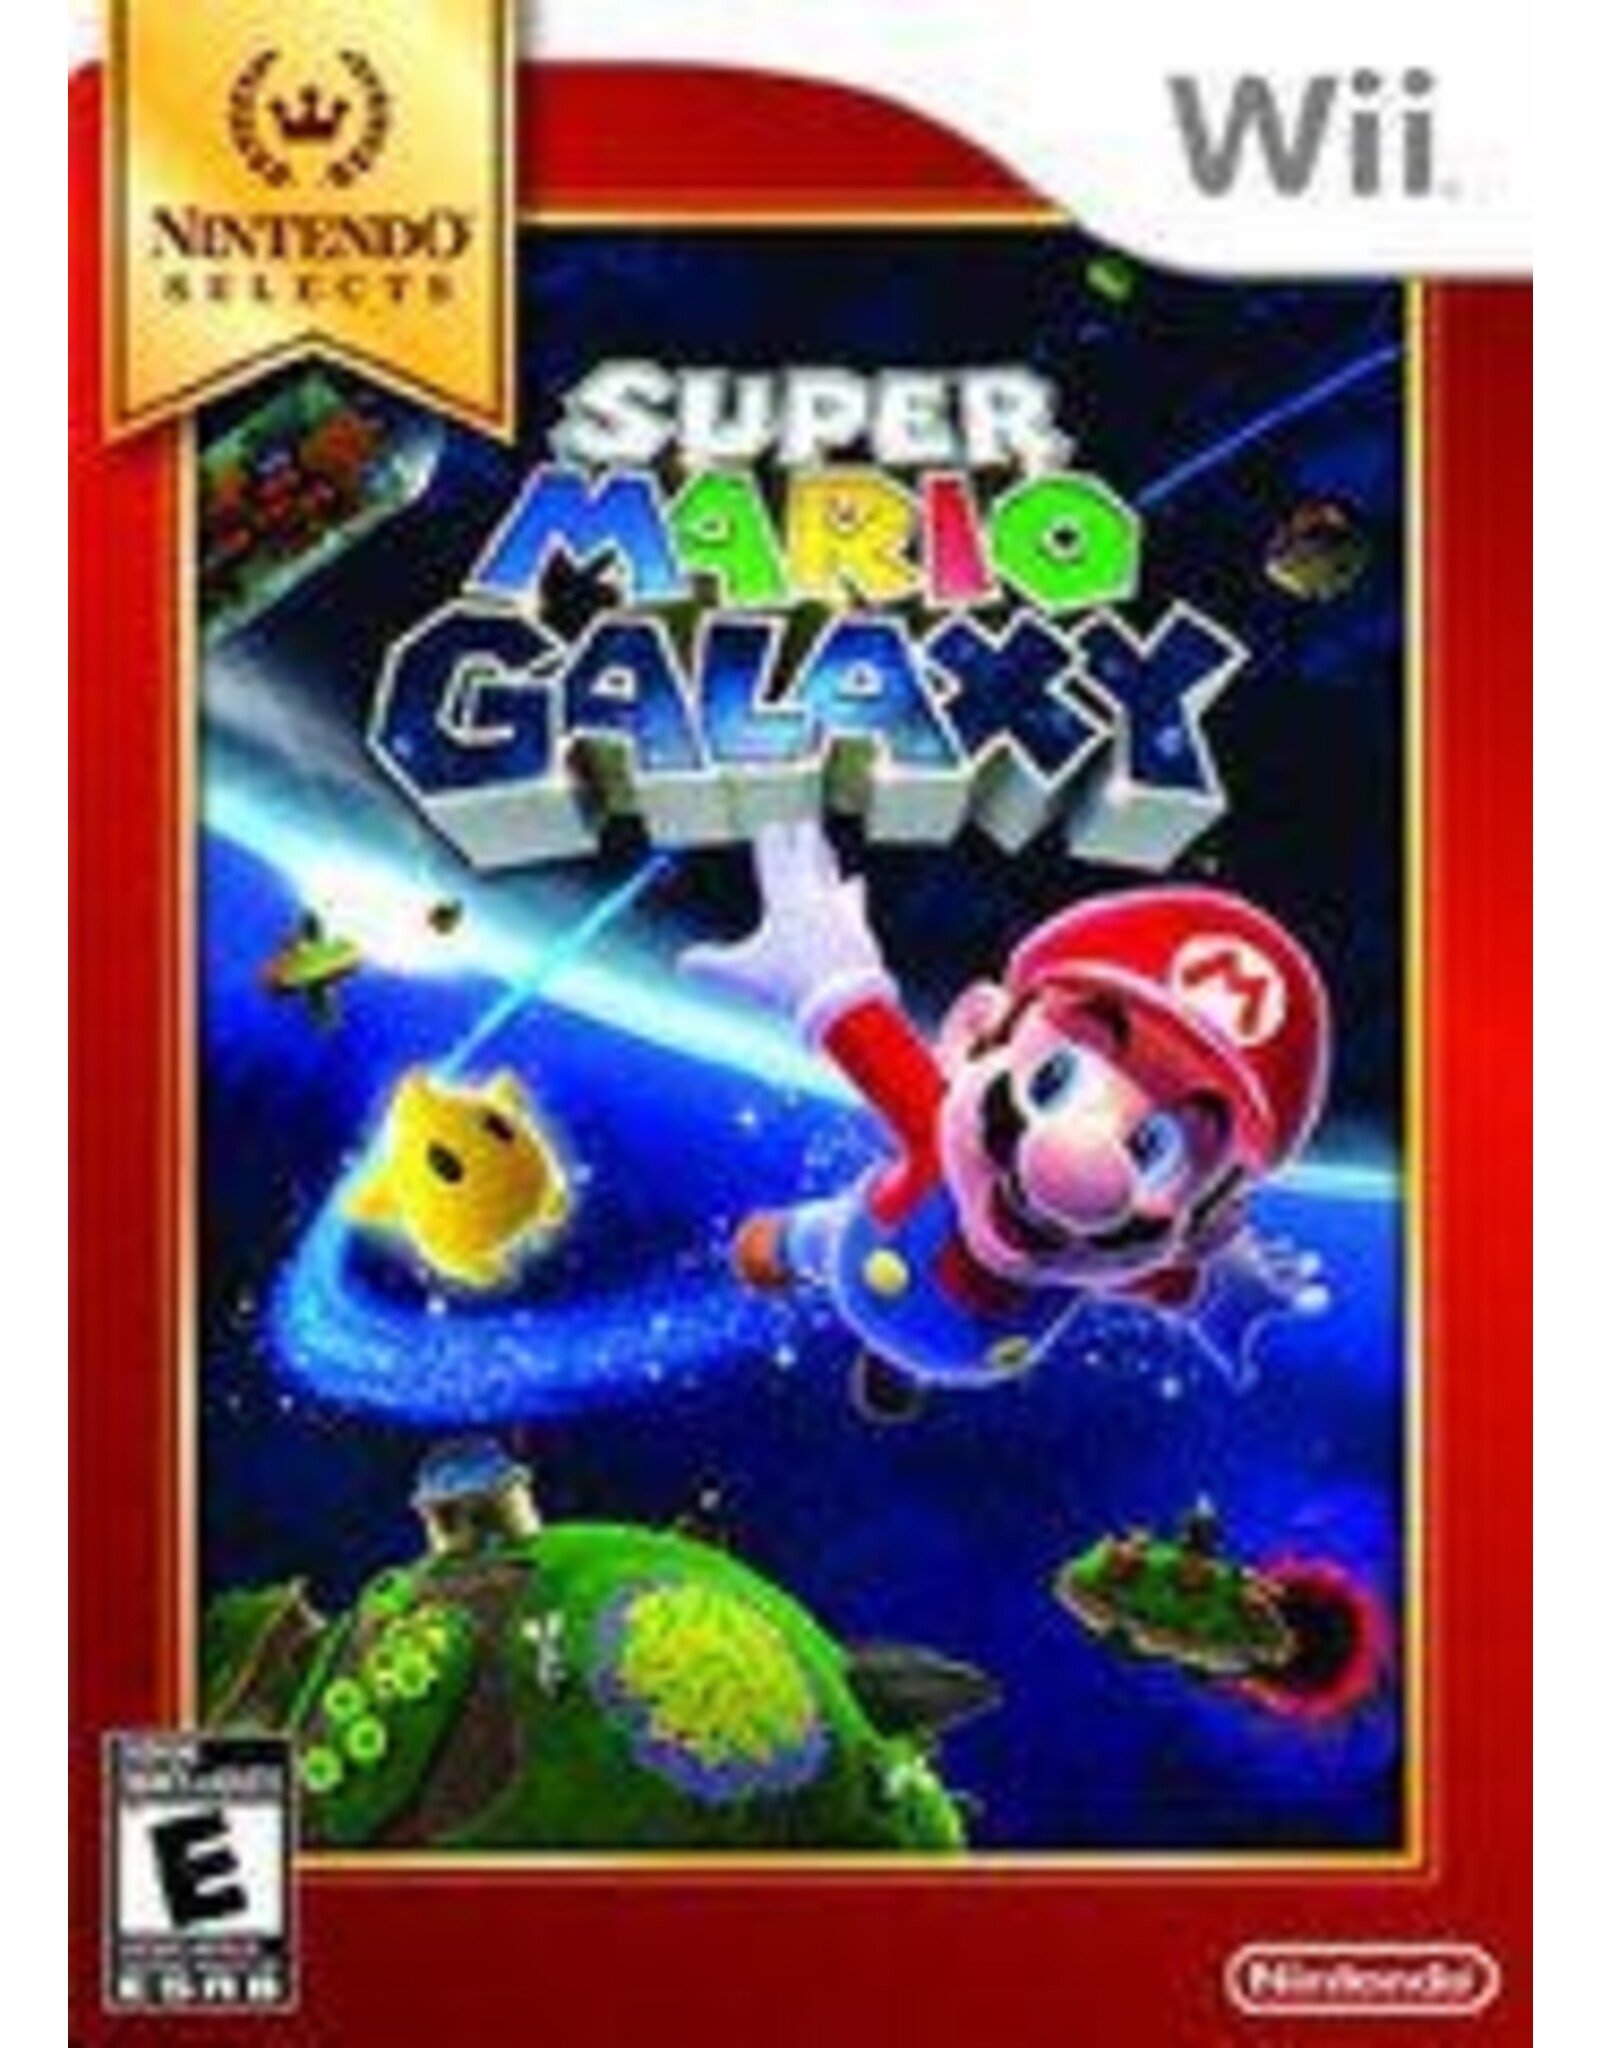 Wii Super Mario Galaxy - Nintendo Selects (Used)